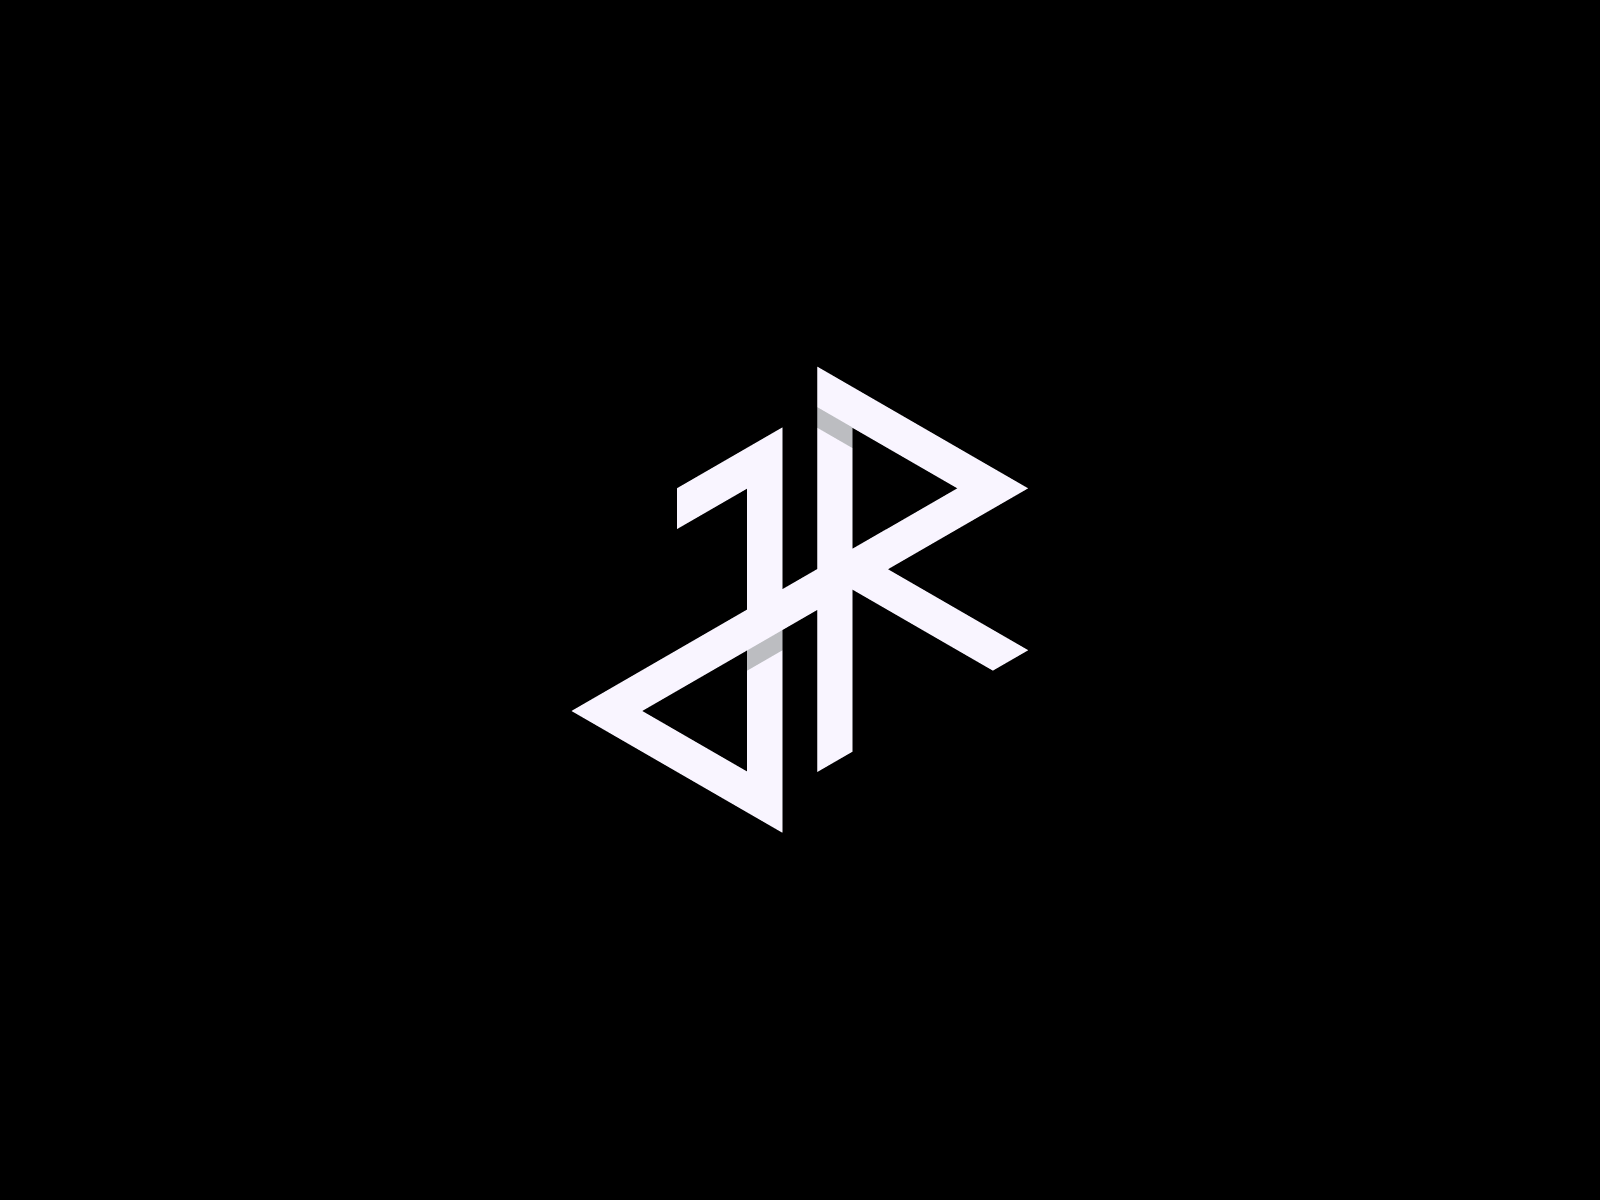 JR logo design | Branding & Logo Templates ~ Creative Market